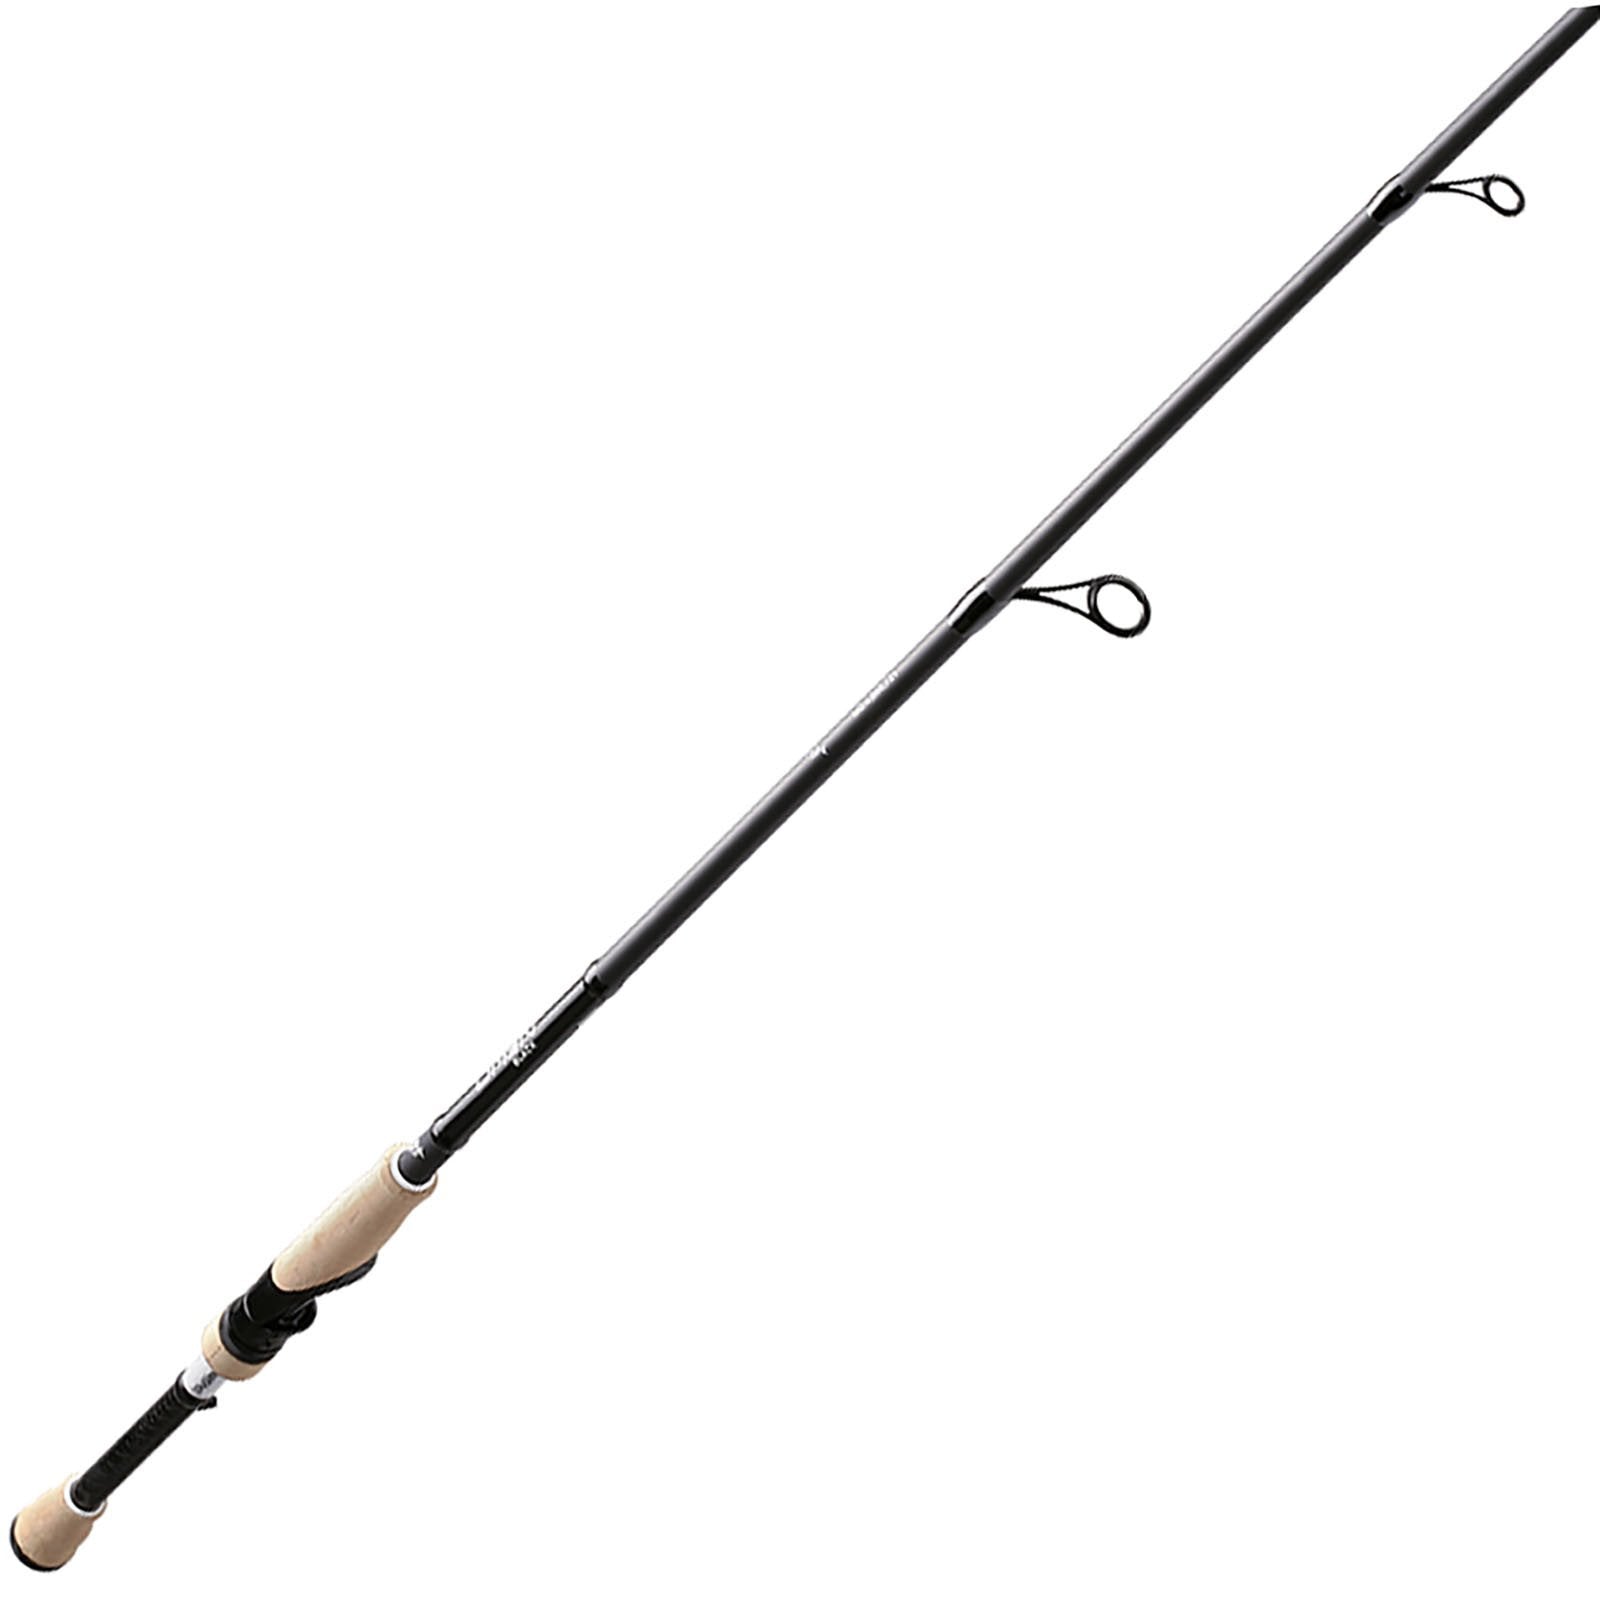 Black fishing rod with spinning reel, Fishing Rods Fishing Reels